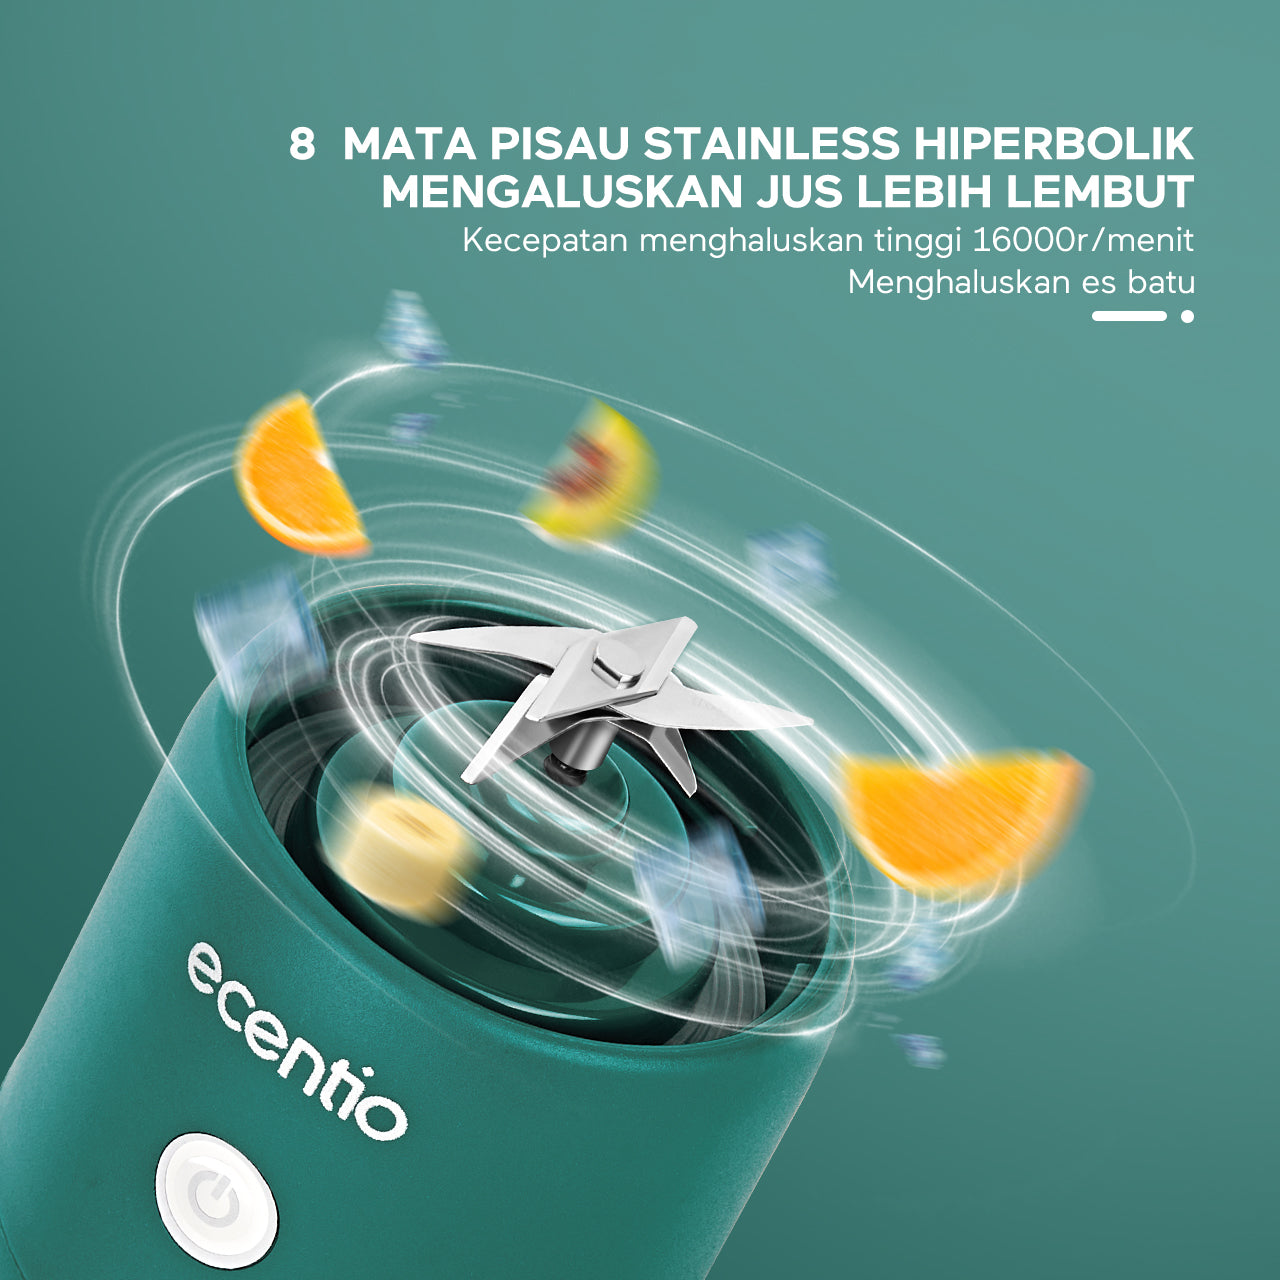 ecentio juice portable 8 pisau kaca blender/juicer 2 botol mini USB Blander Jus Vitamin